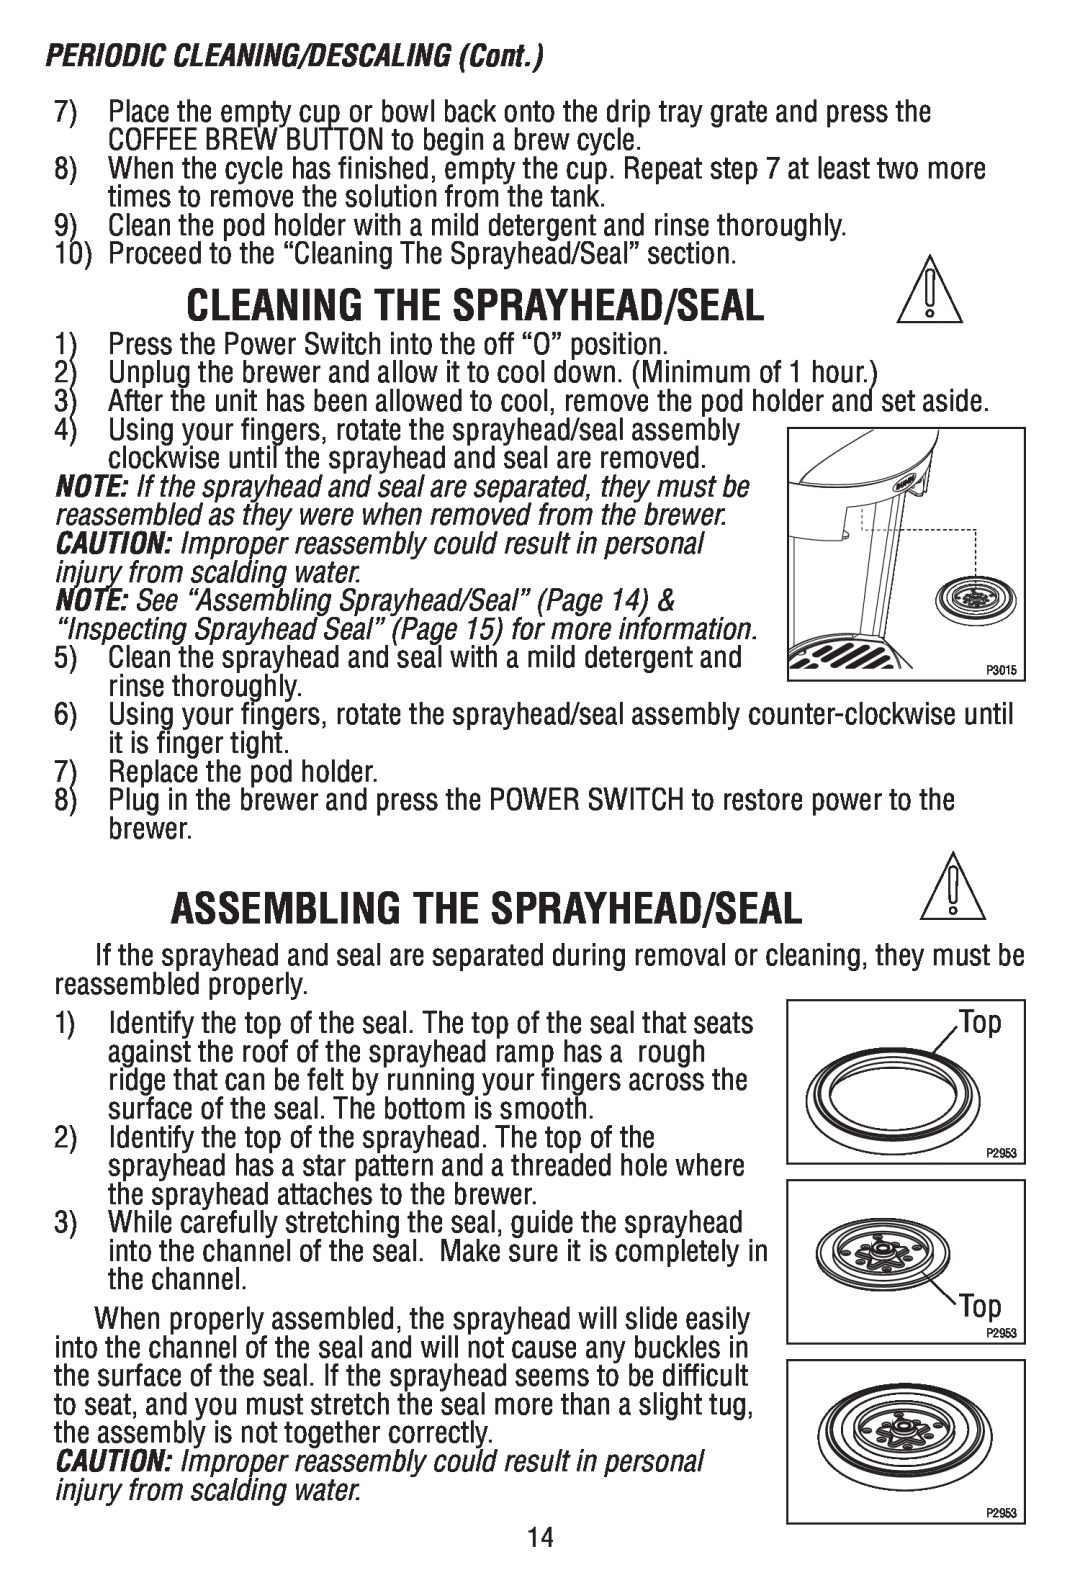 Bunn P2896 warranty Cleaning The Sprayhead/Seal, Assembling The Sprayhead/Seal, PERIODIC CLEANING/DESCALING Cont 